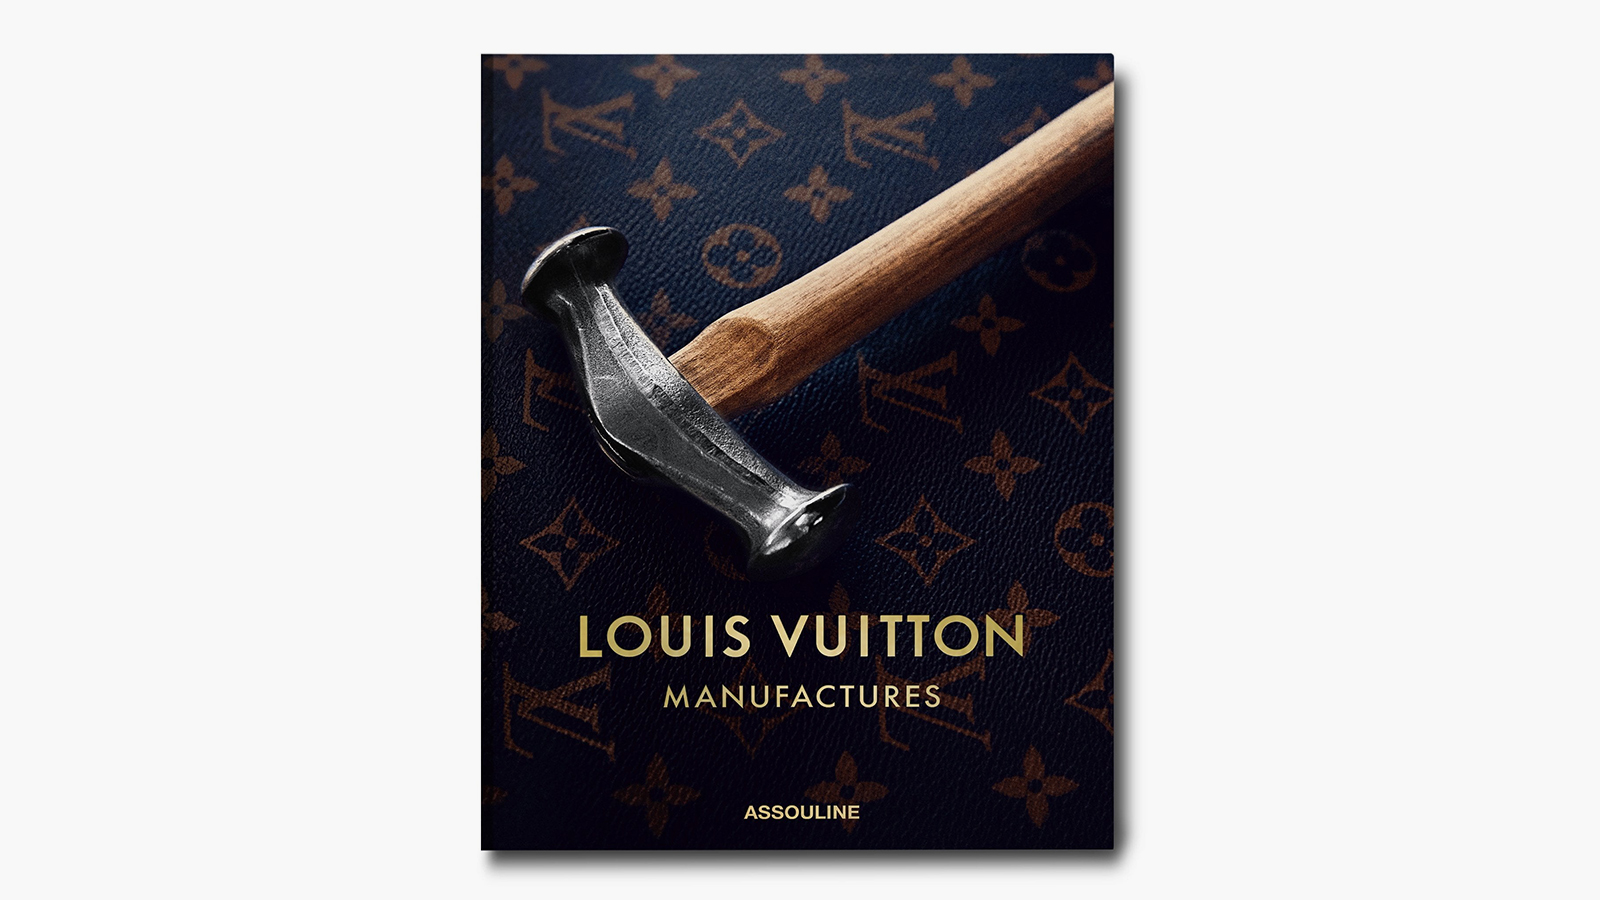 ‘Louis Vuitton Manufactures’ by Nicholas Foulkes